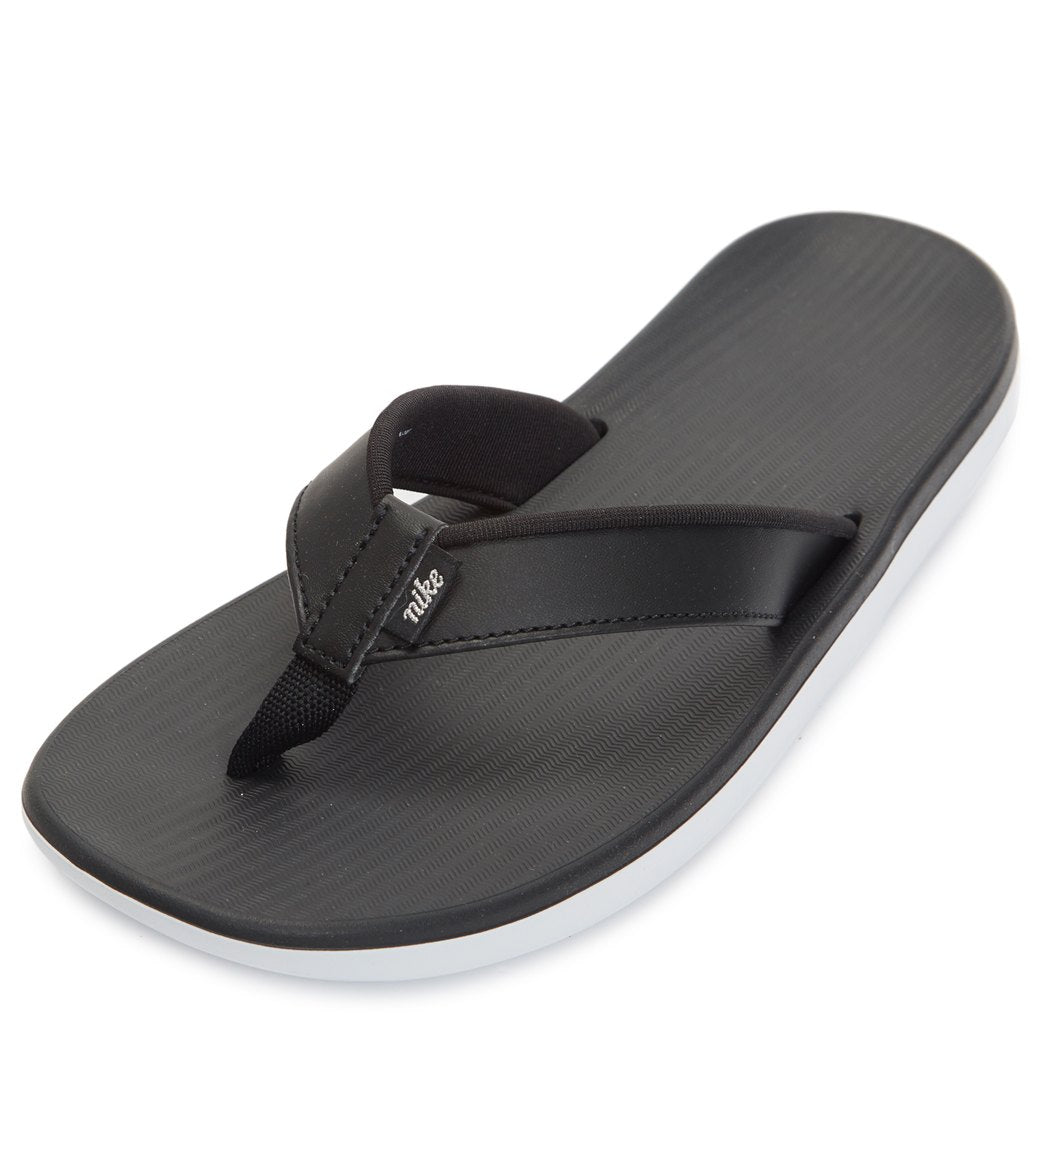 Nike Women's Bella Kai Flip Flop Sandals - Chameleon Black 12 - Swimoutlet.com